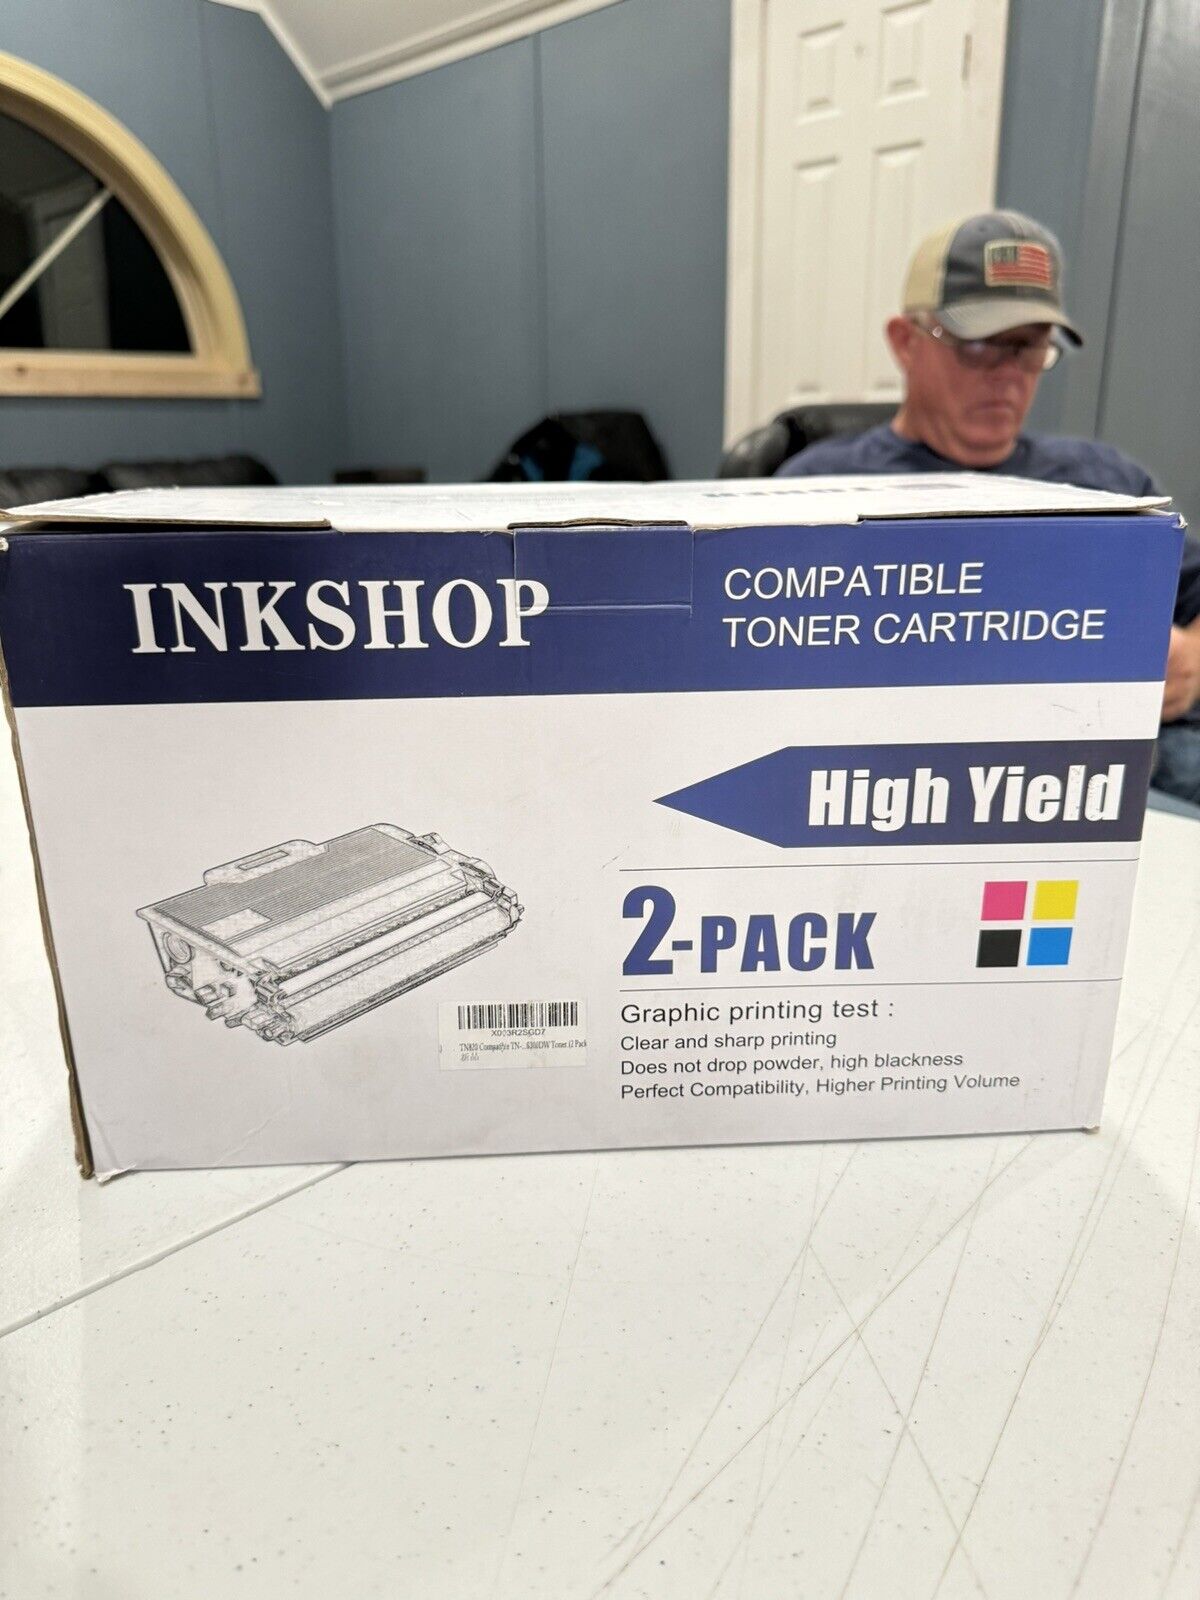 Inkshop Compatible Toner Cartridge High Yield 2-pack TN820